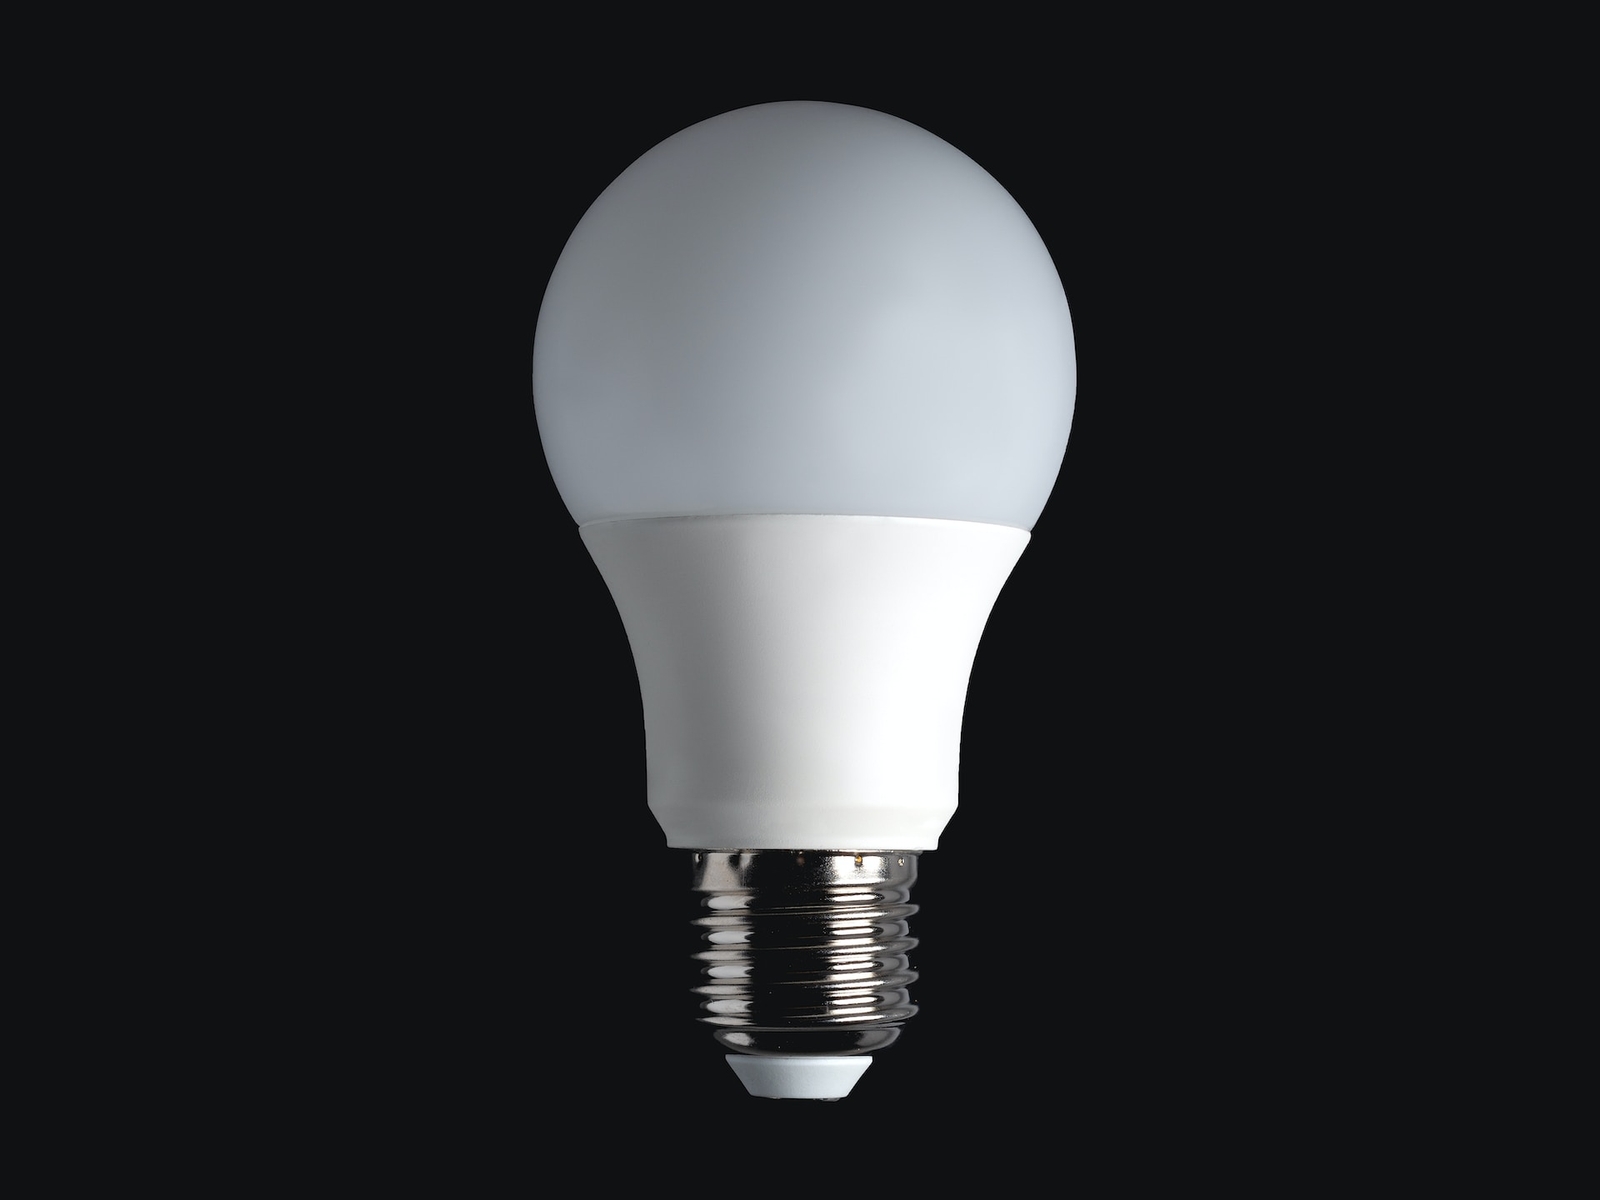 A single LED light bulb illuminated, centered against a pure black background.